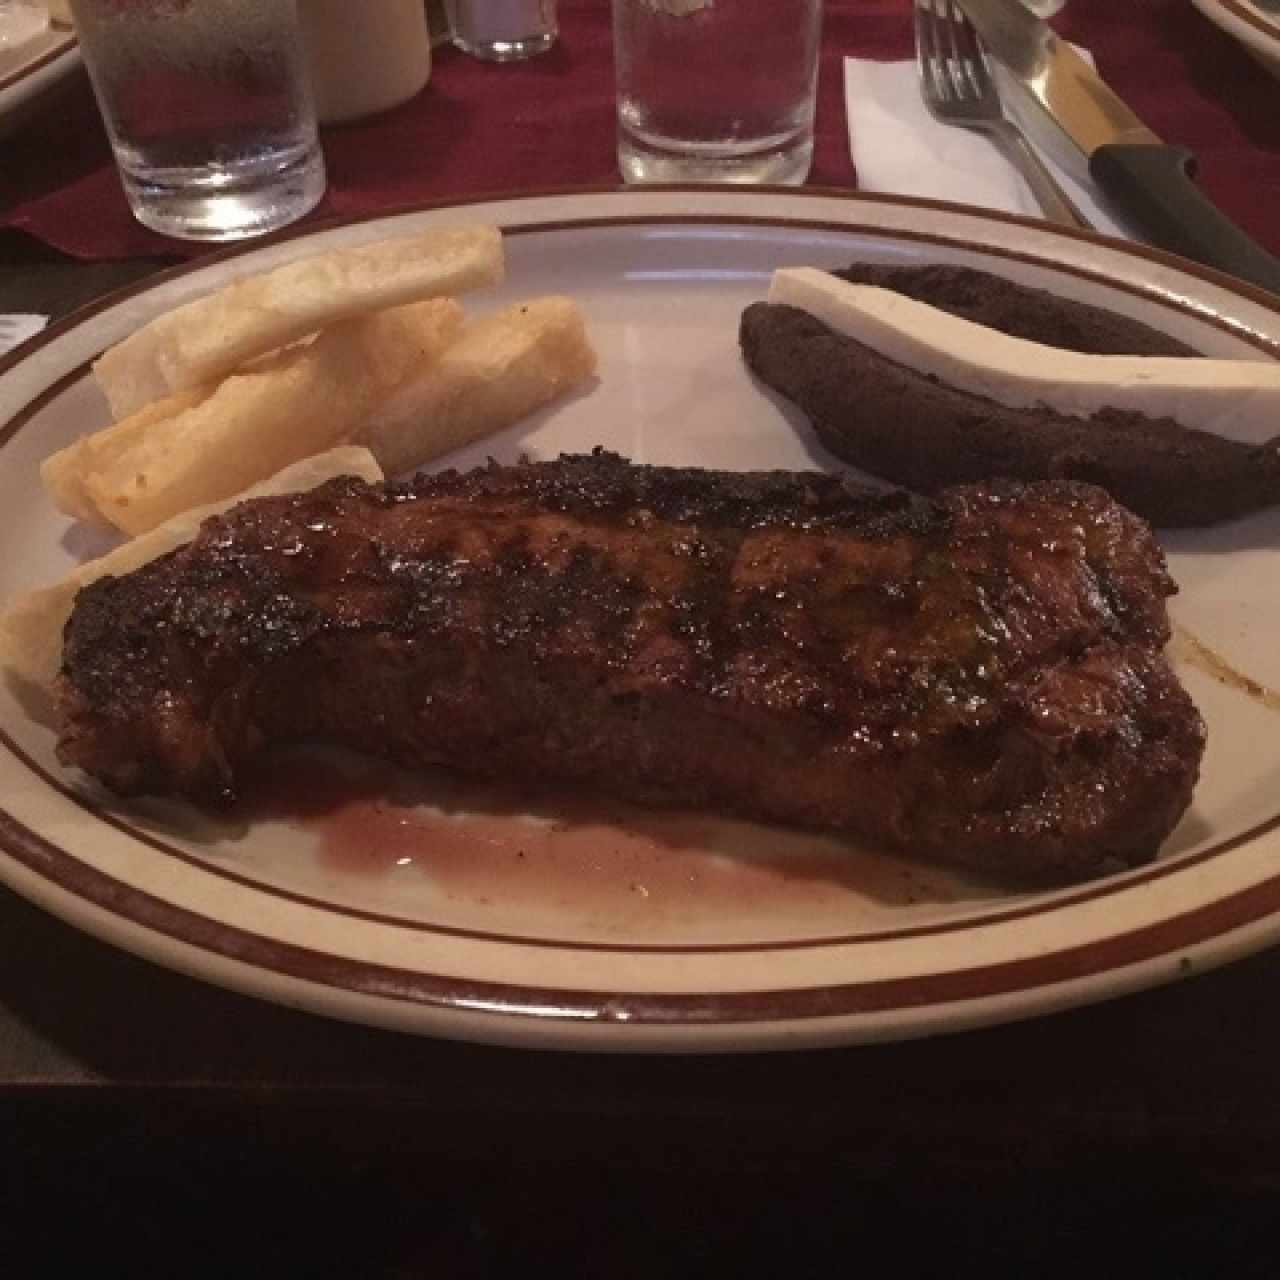 New York Steak: 16oz